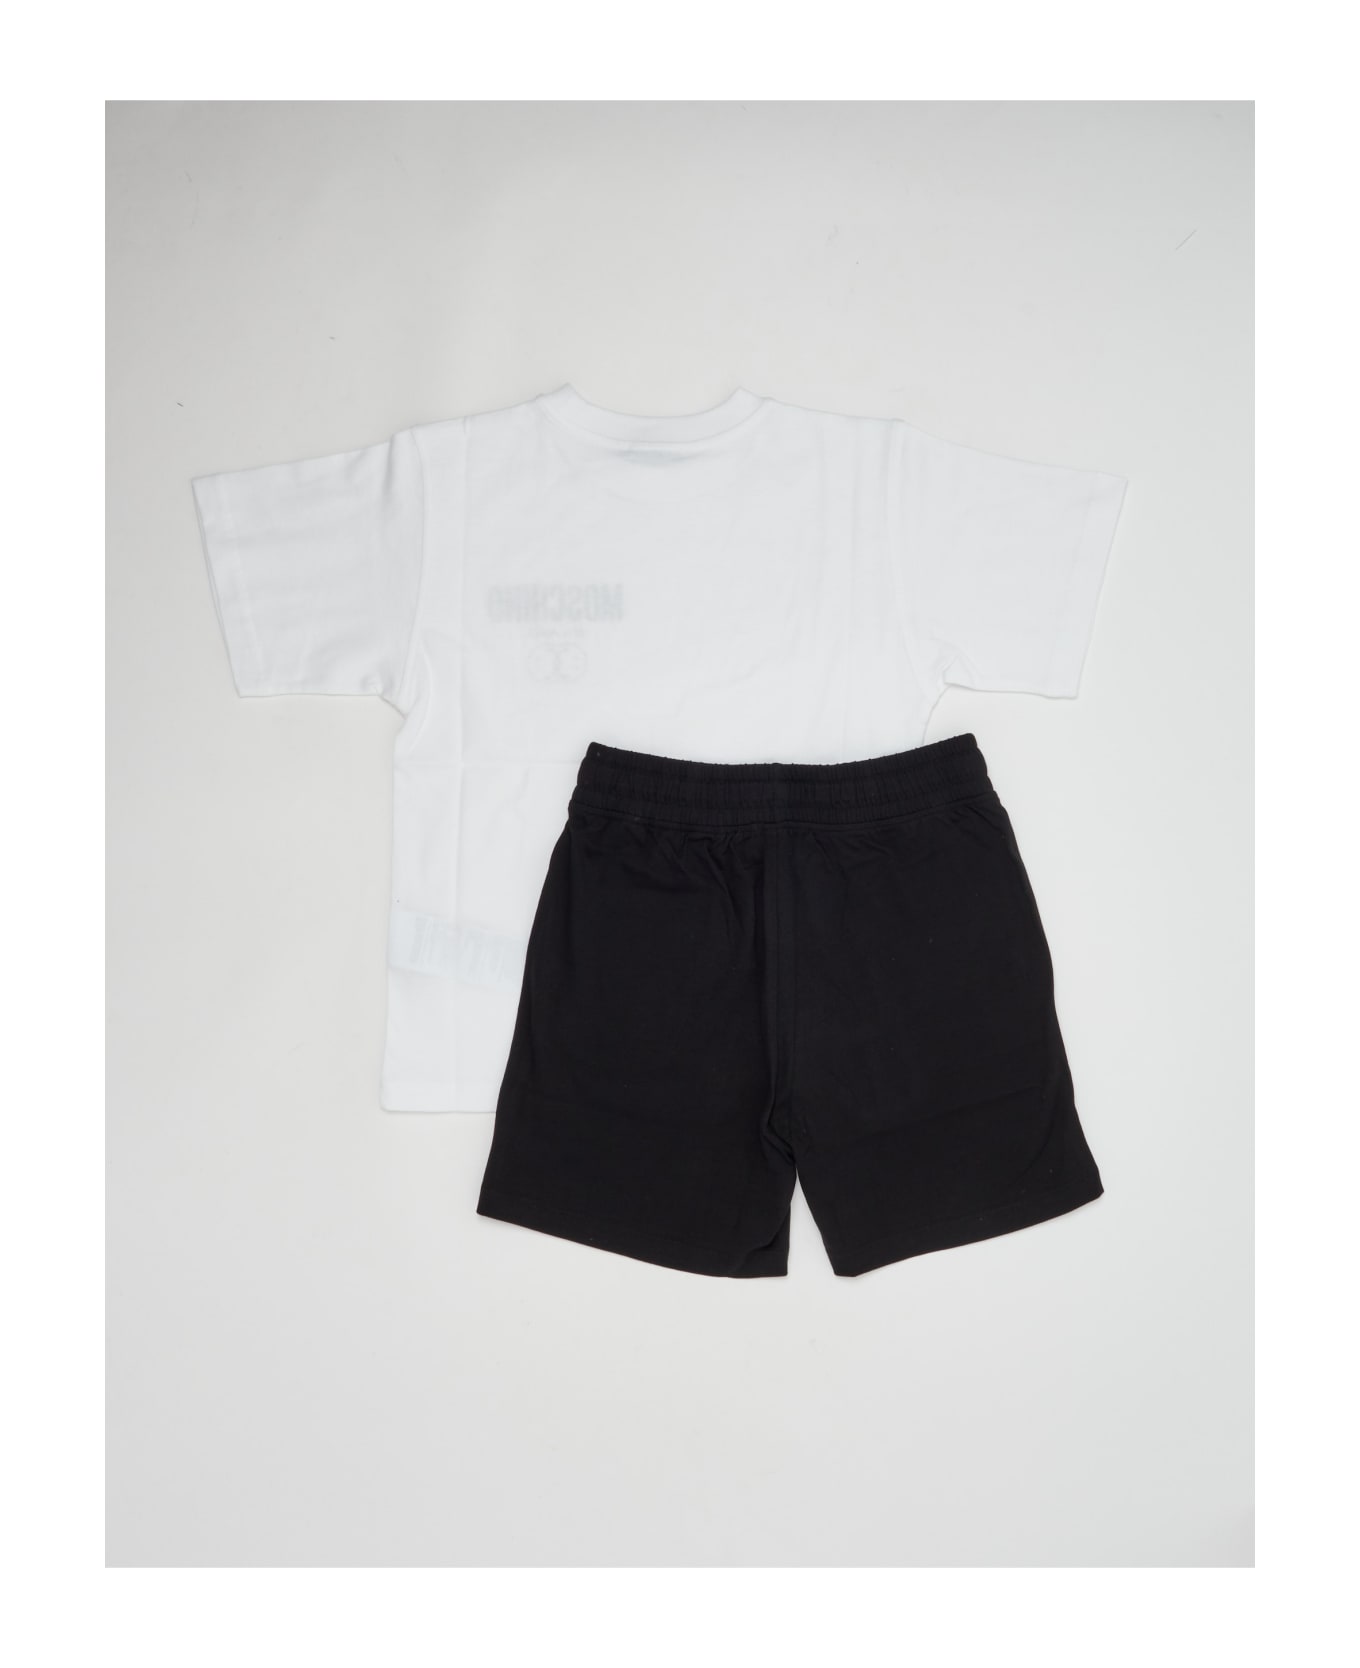 Moschino T-shirt+short Suit - BIANCO